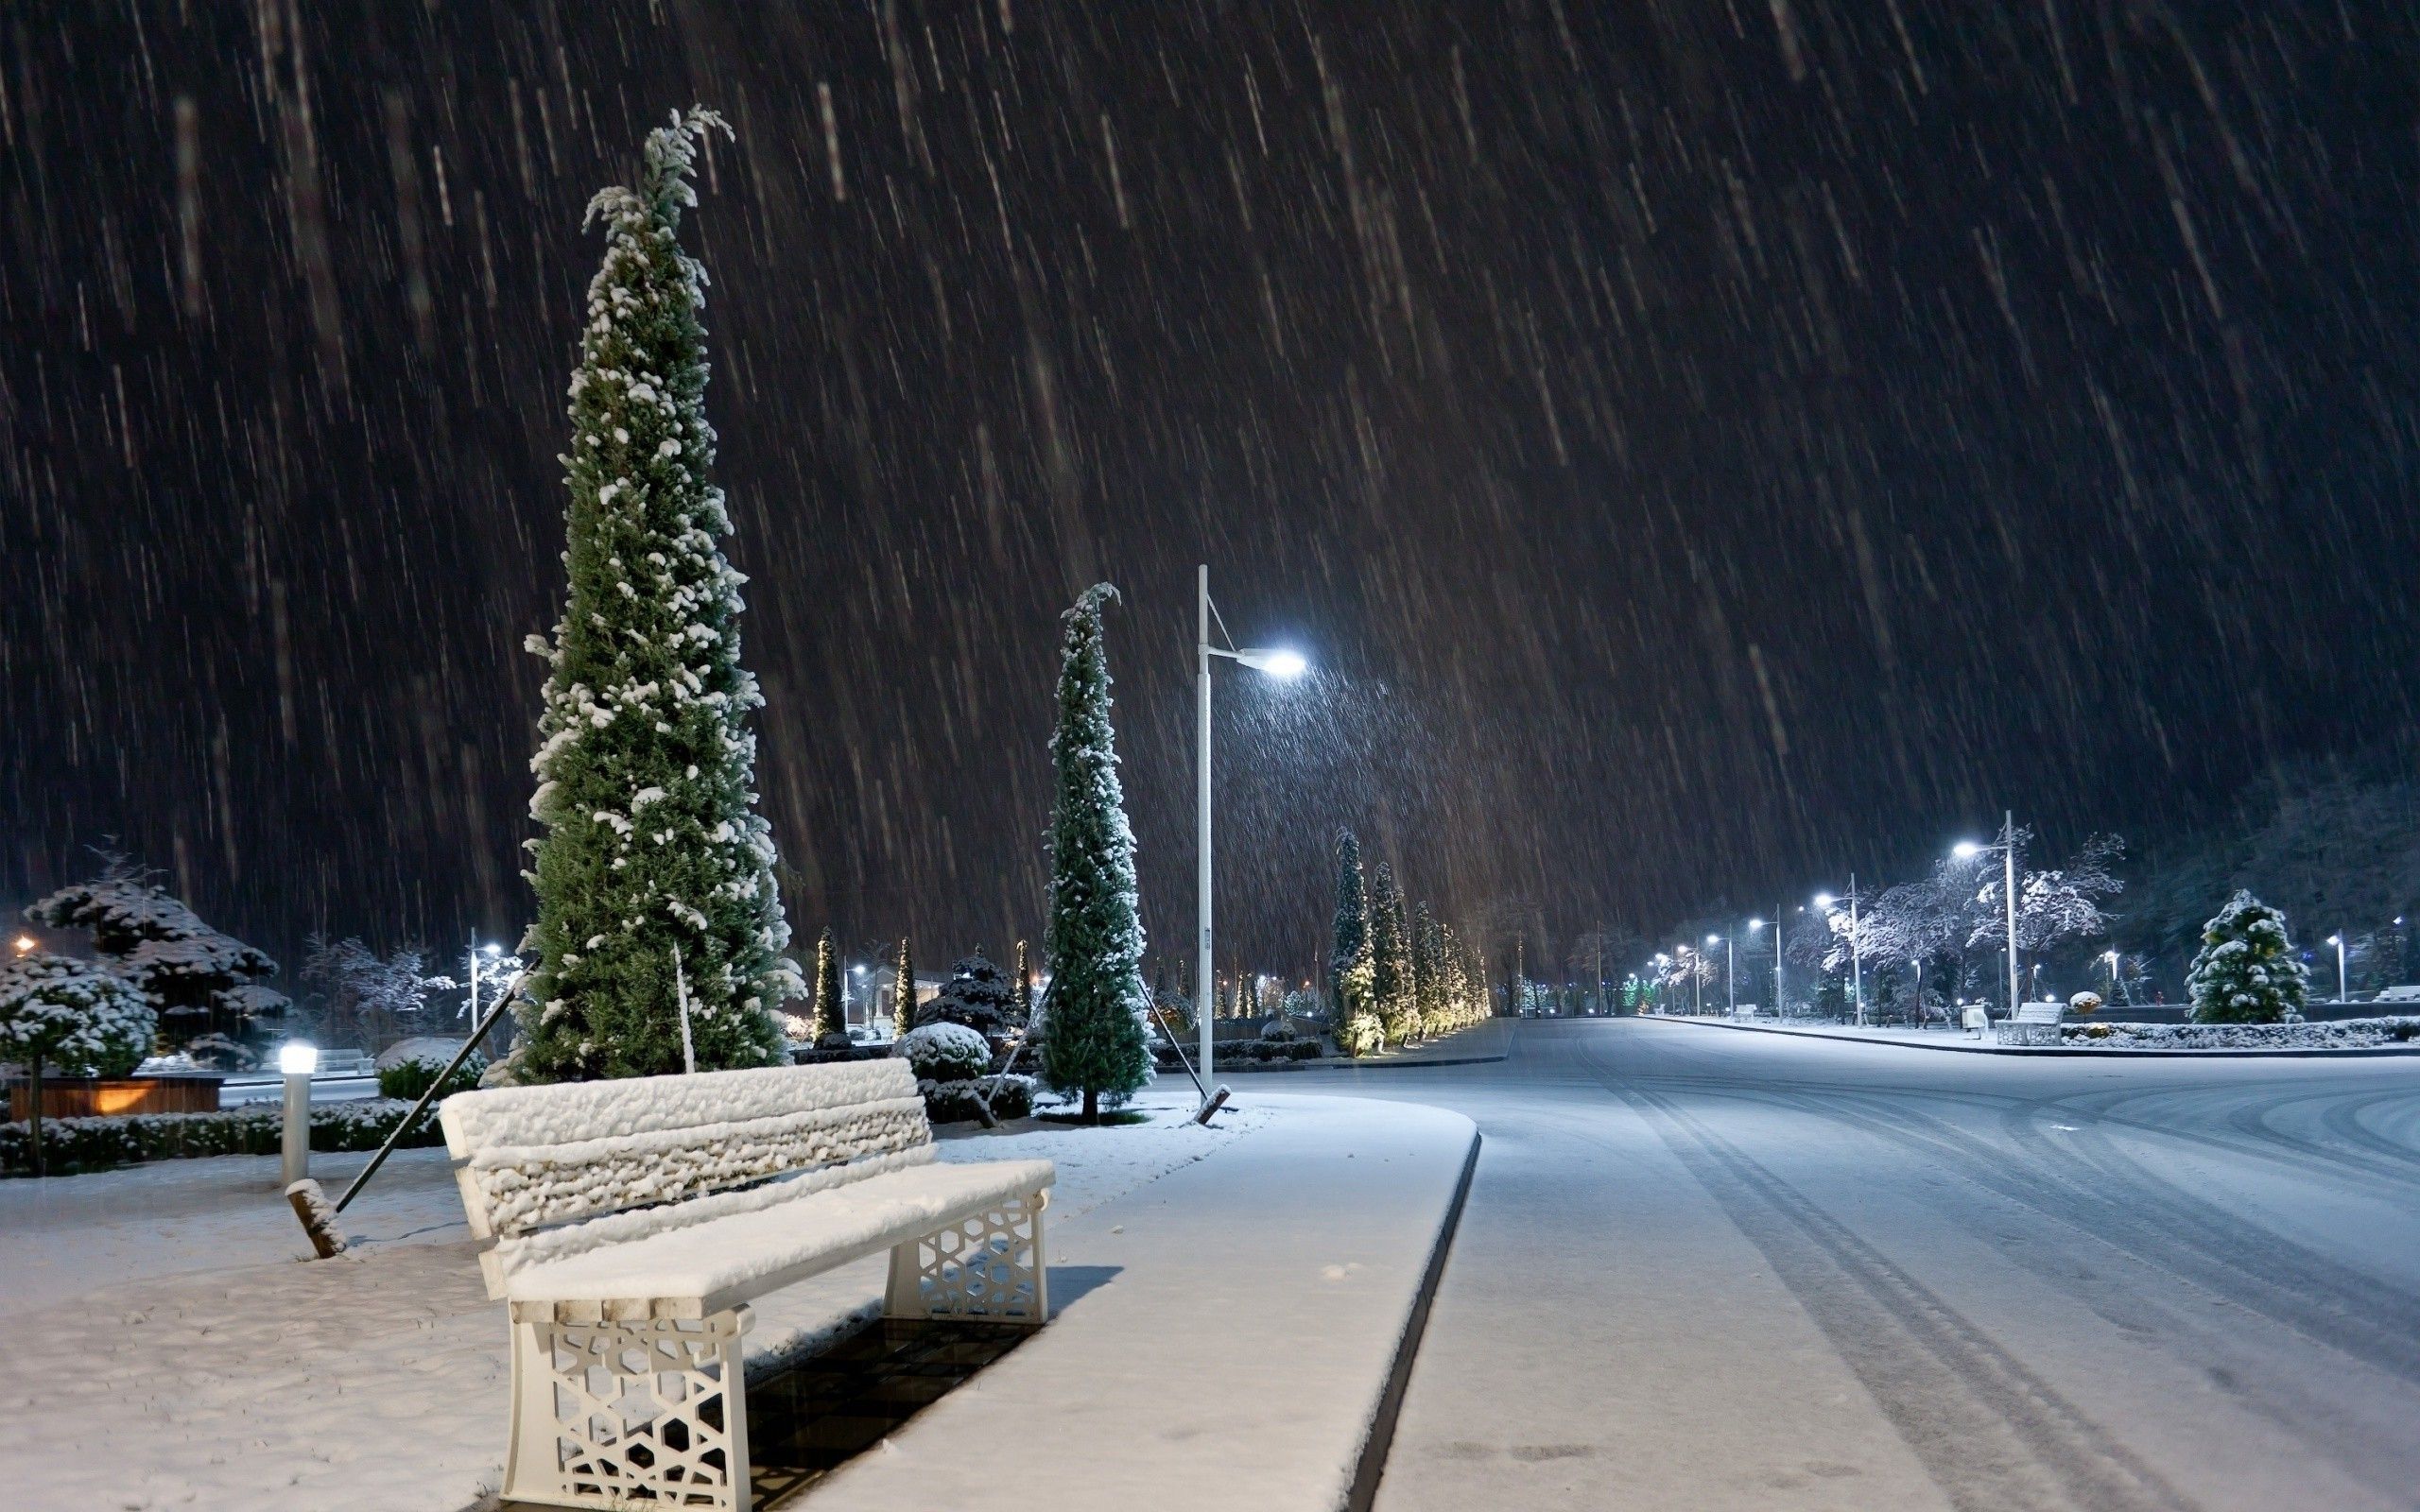 Snow night on a city street. Facebook cover photo art, Snow night, Winter good night